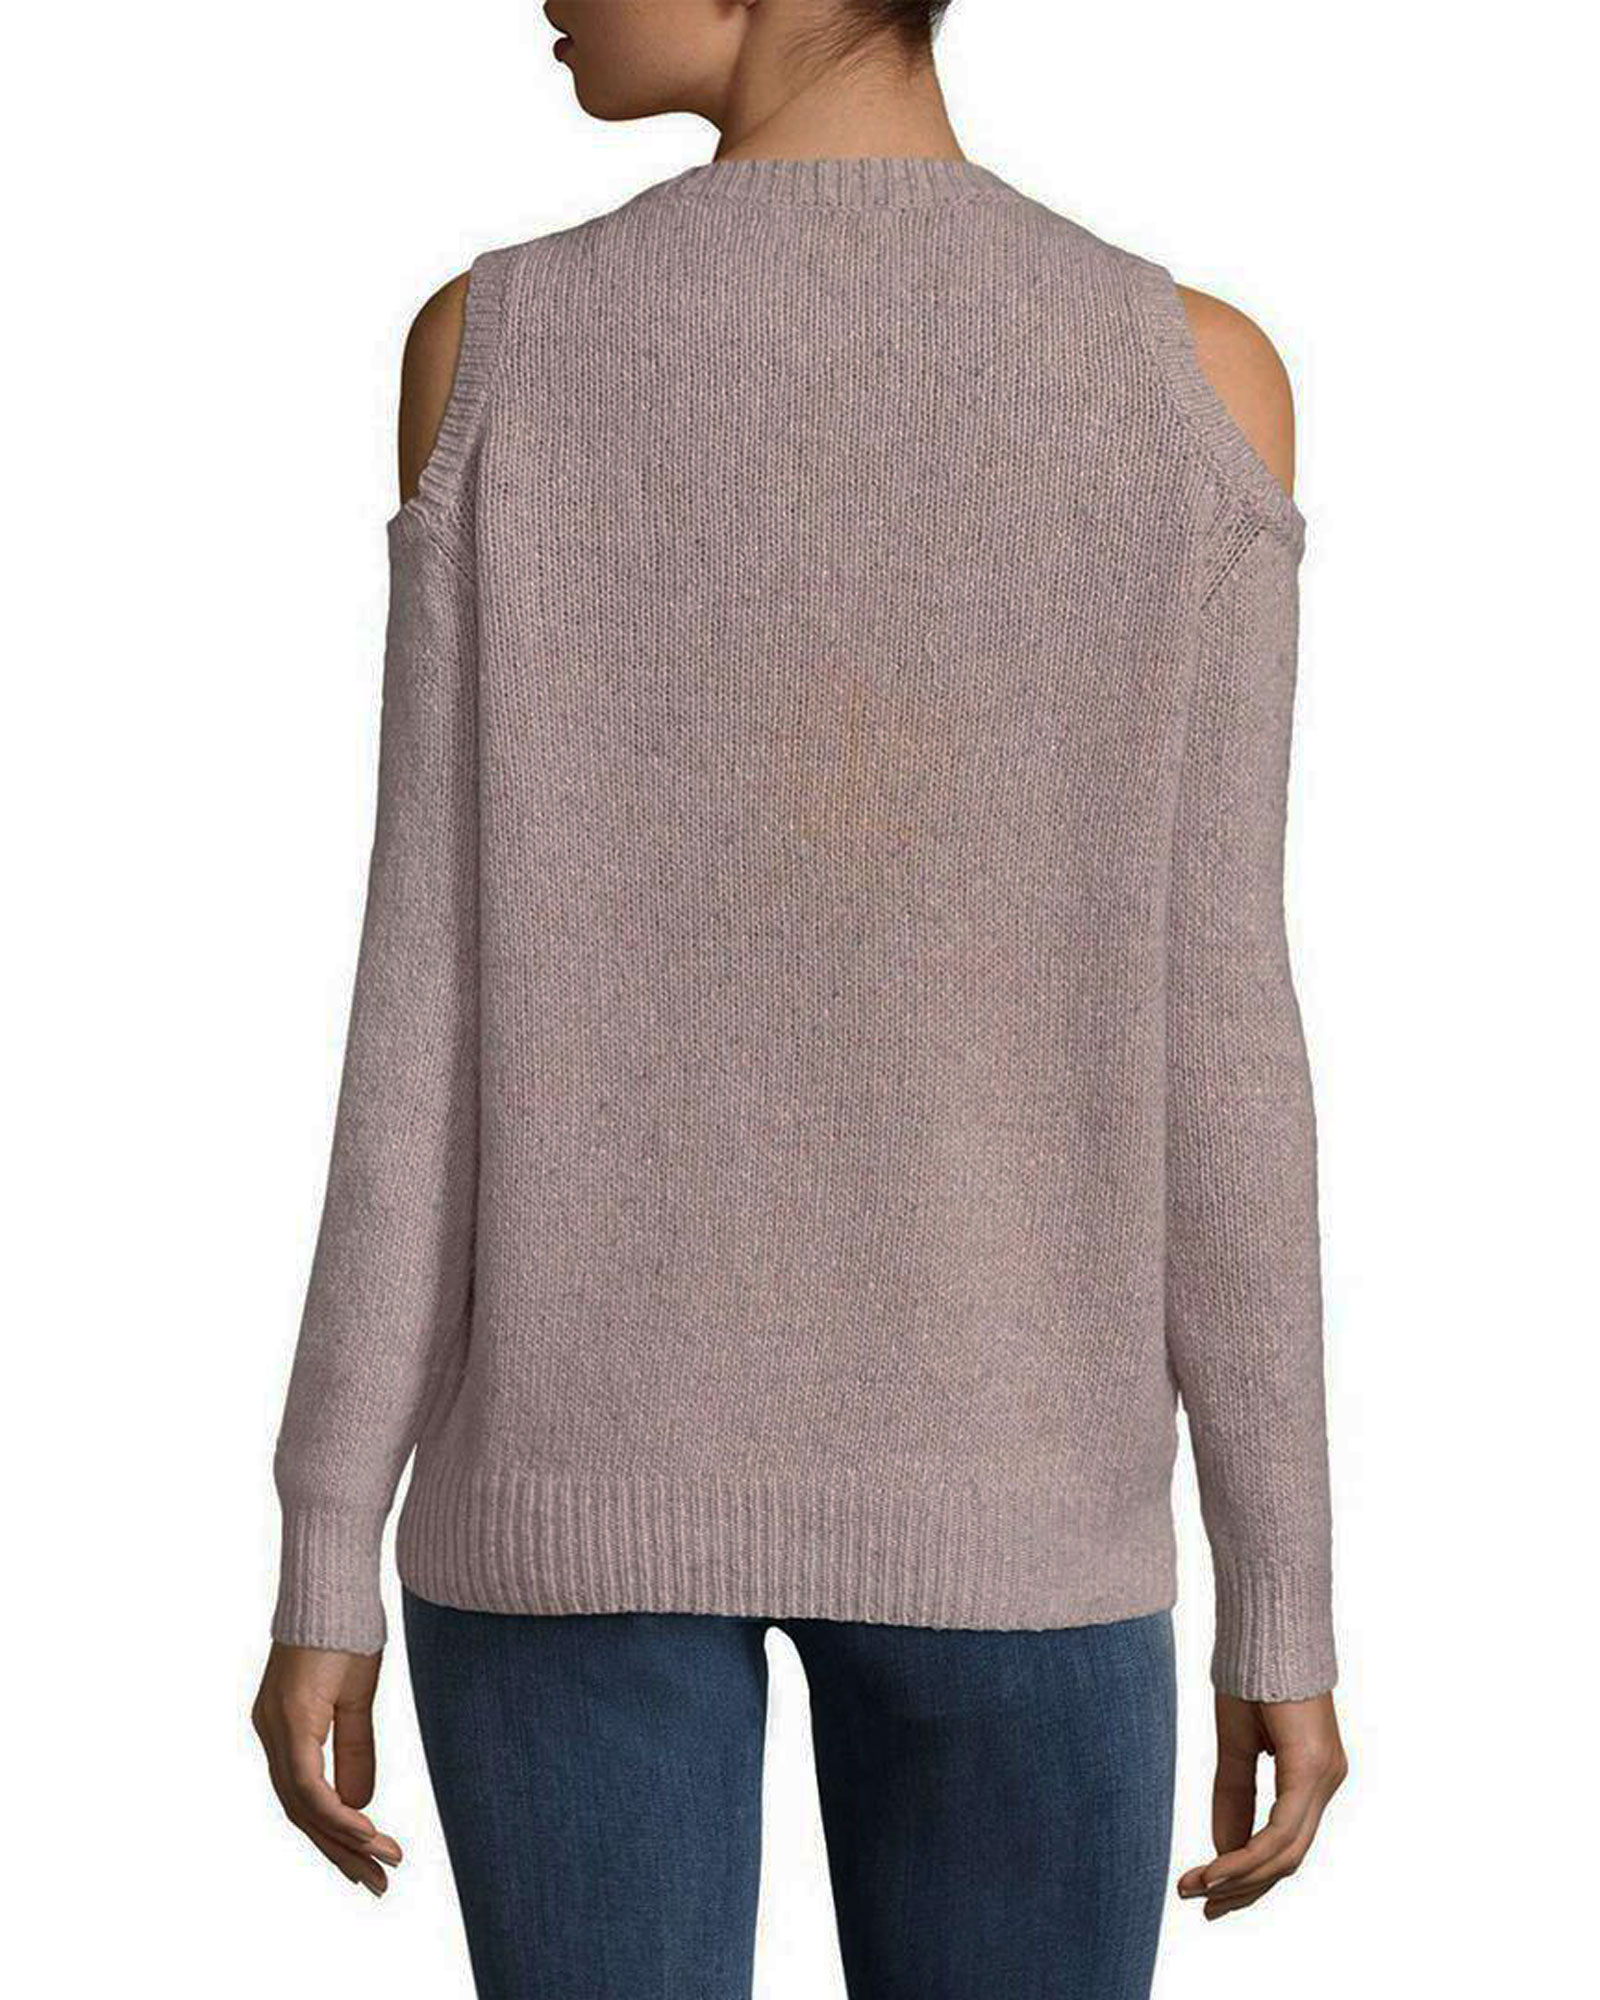 REBECCA MINKOFF Women's Cold-Shoulder Page Sweater $148 NWT | eBay